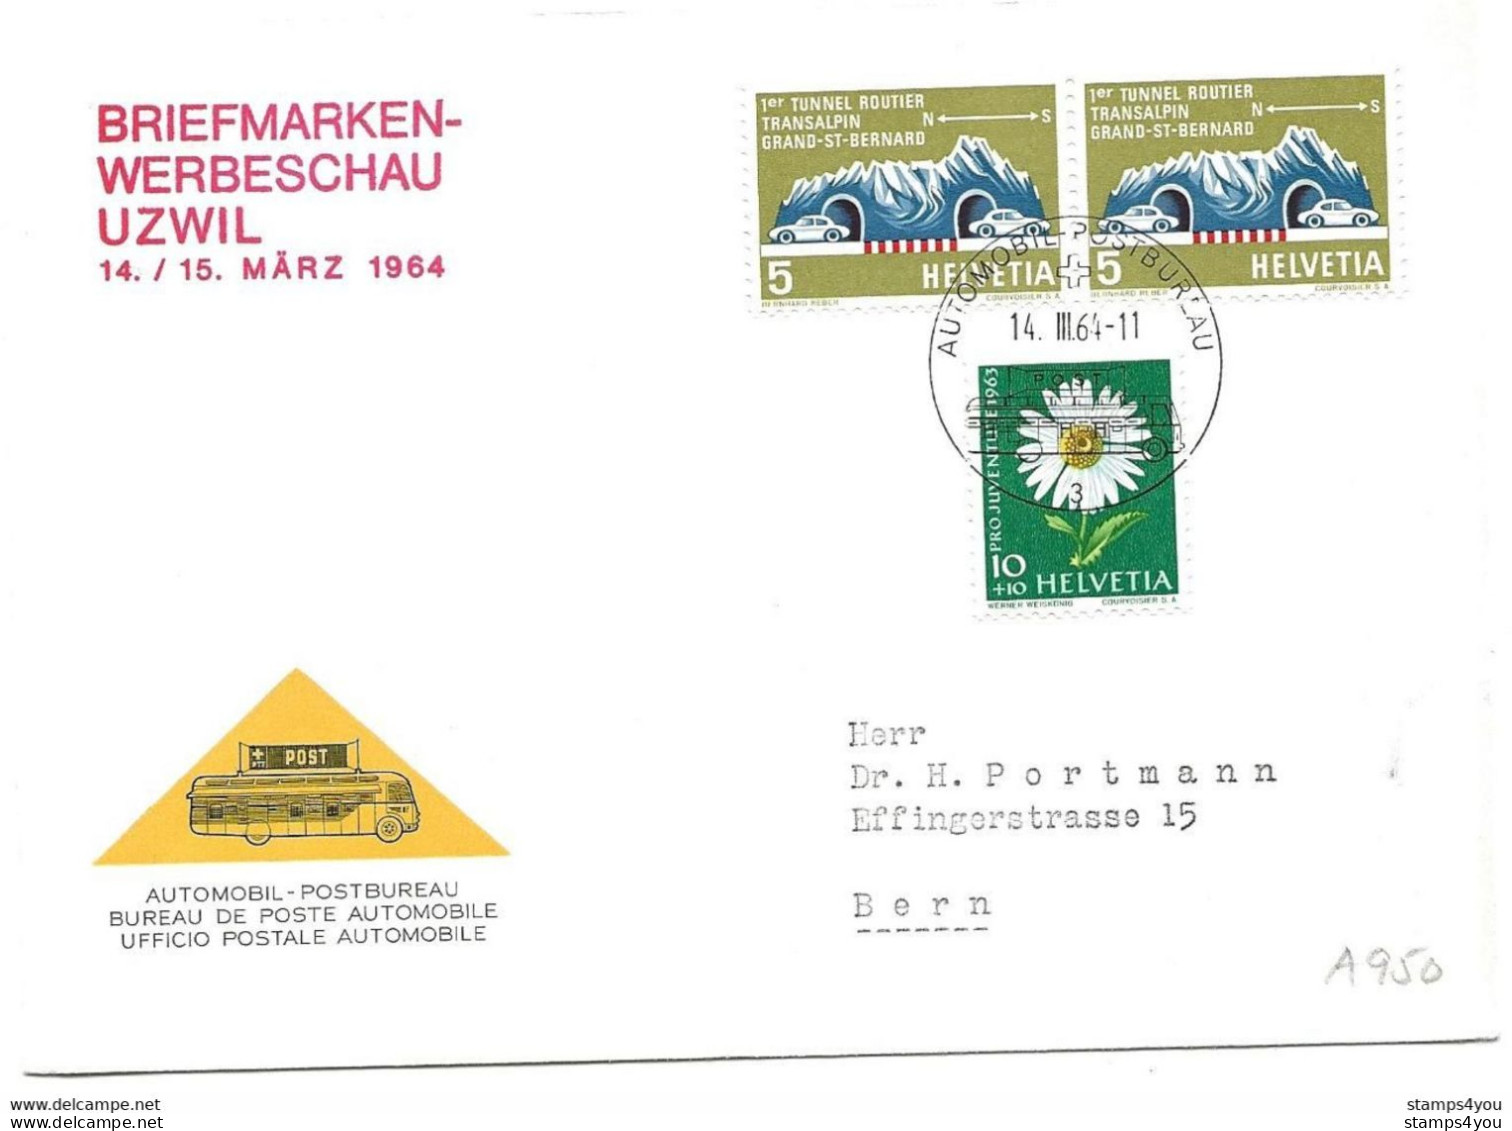 270 - 16 - Enveloppe Avec Oblit Spéciale "Briefmarken Werbeschau Uzwil 1964" - Storia Postale